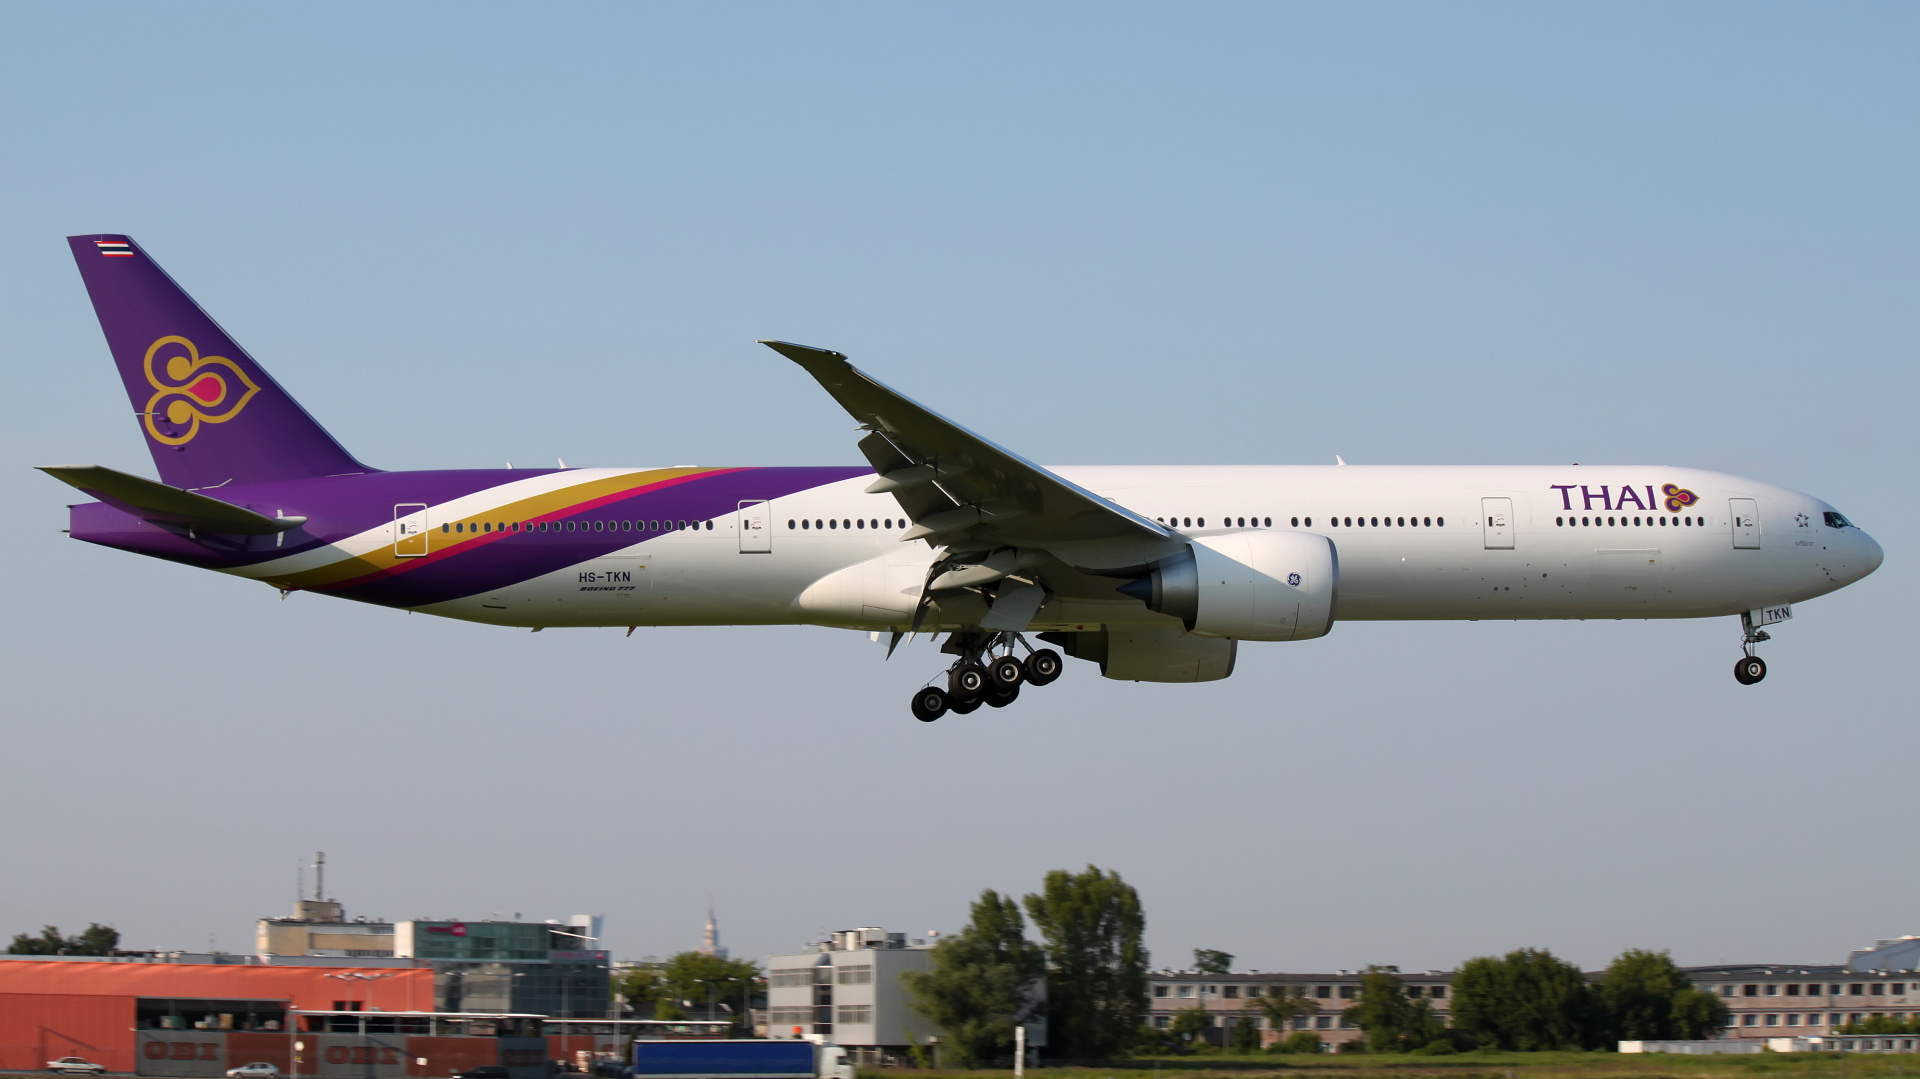 HS-TKN (Aircraft » EPWA Spotting » Boeing 777-300ER » Thai Airlines)